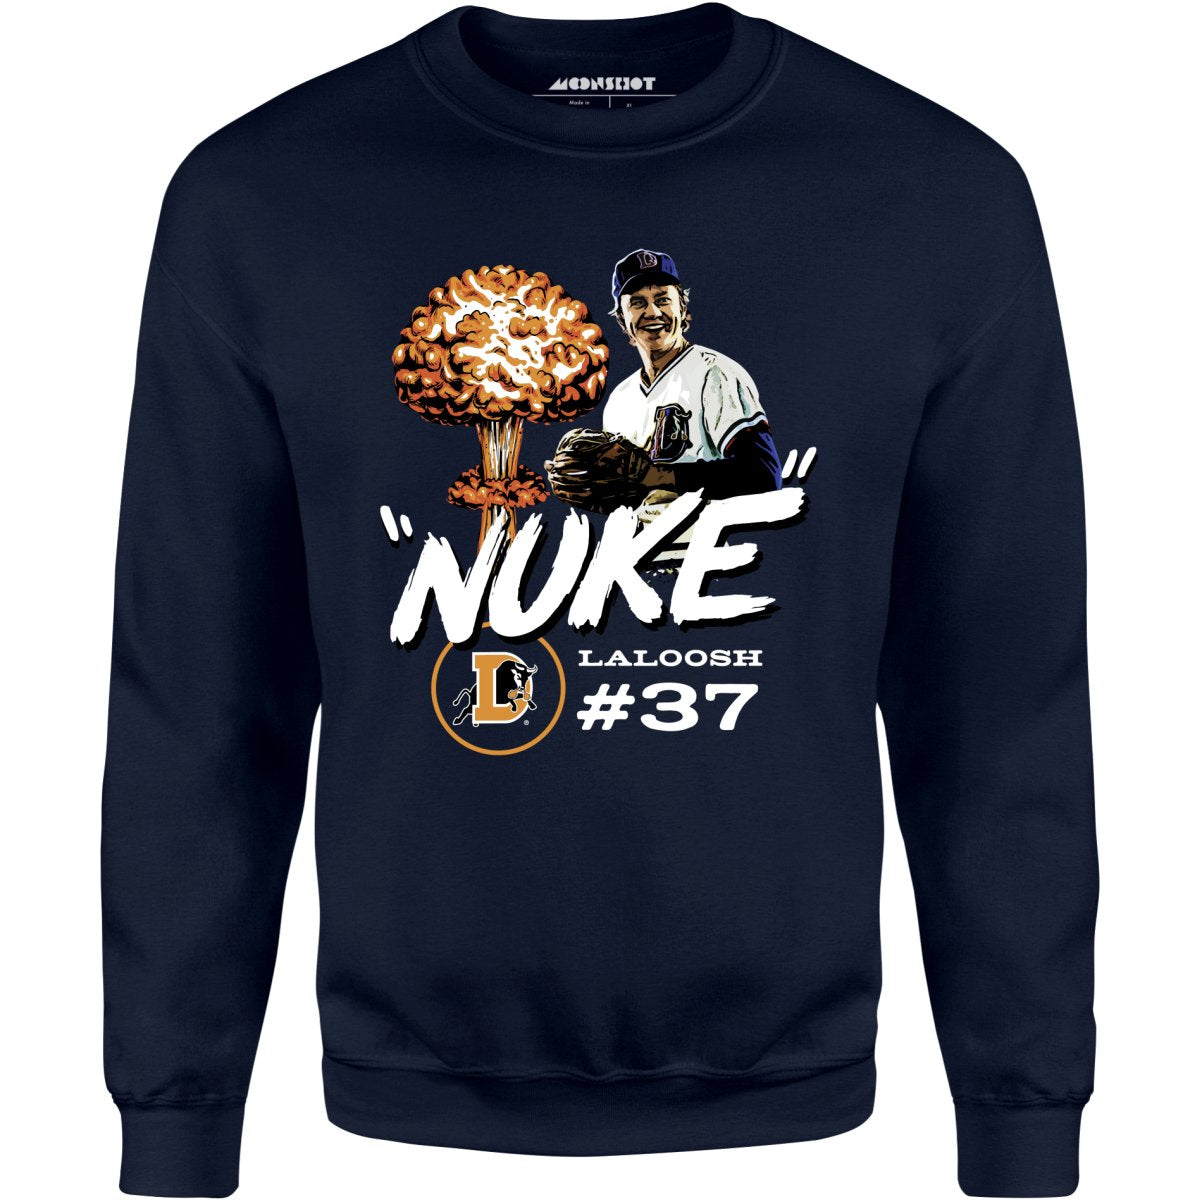 Nuke Laloosh Tribute - Unisex Sweatshirt